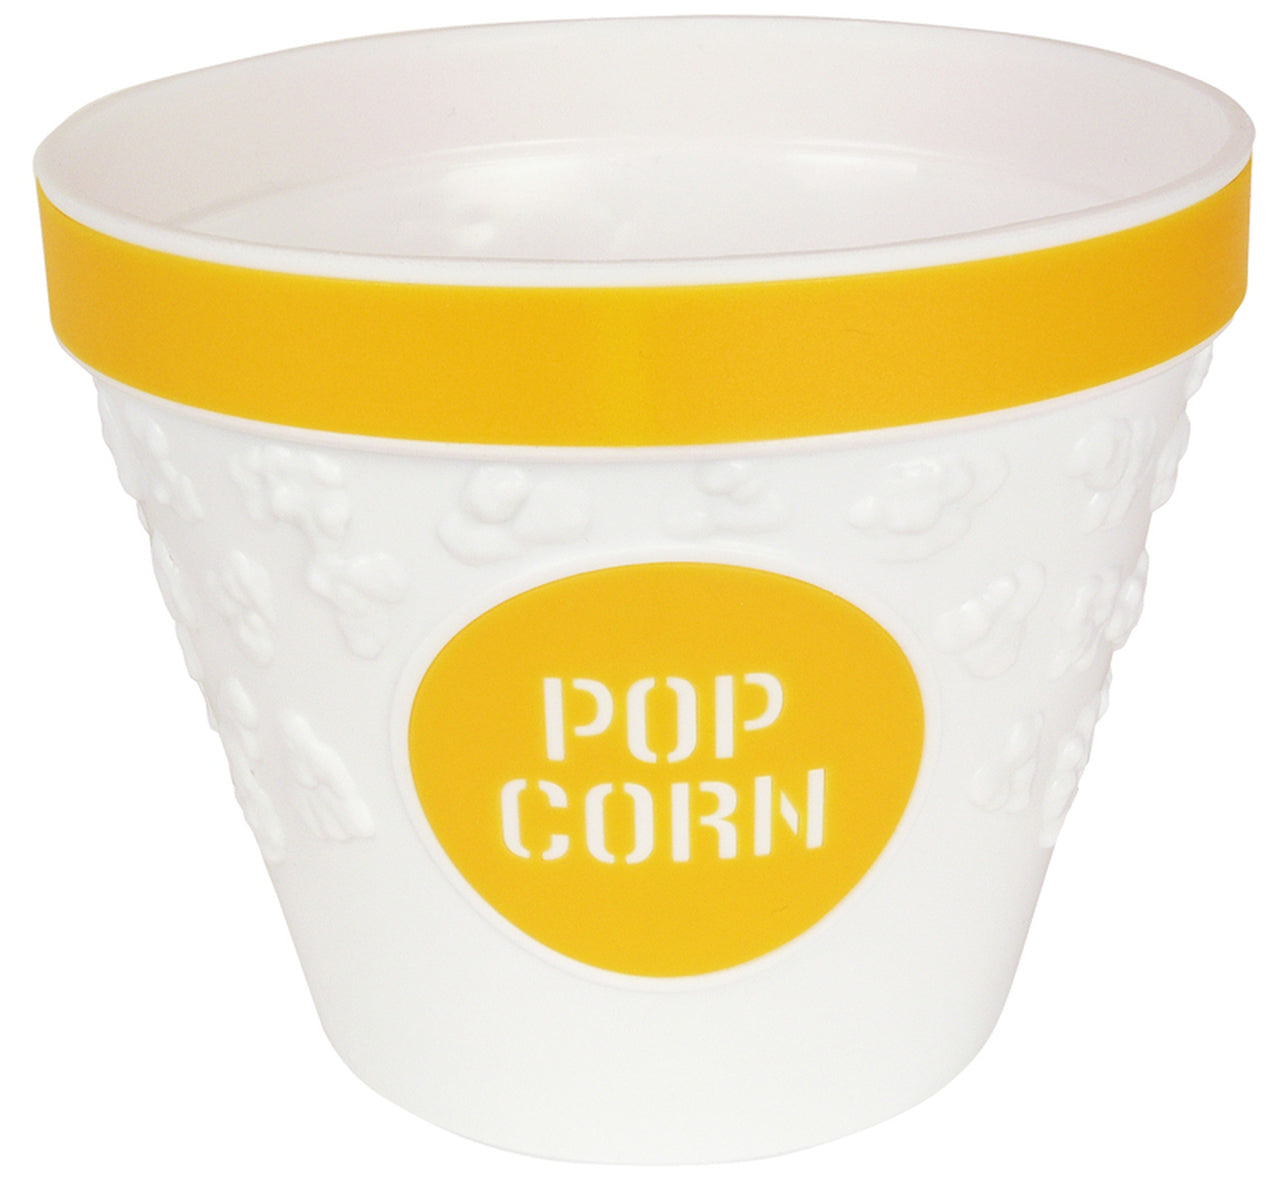 https://cdn.shopify.com/s/files/1/0323/0947/7514/products/individual-popcorn-bowl-yellow-1__48774.1452278353.jpg?v=1595275272&width=1280